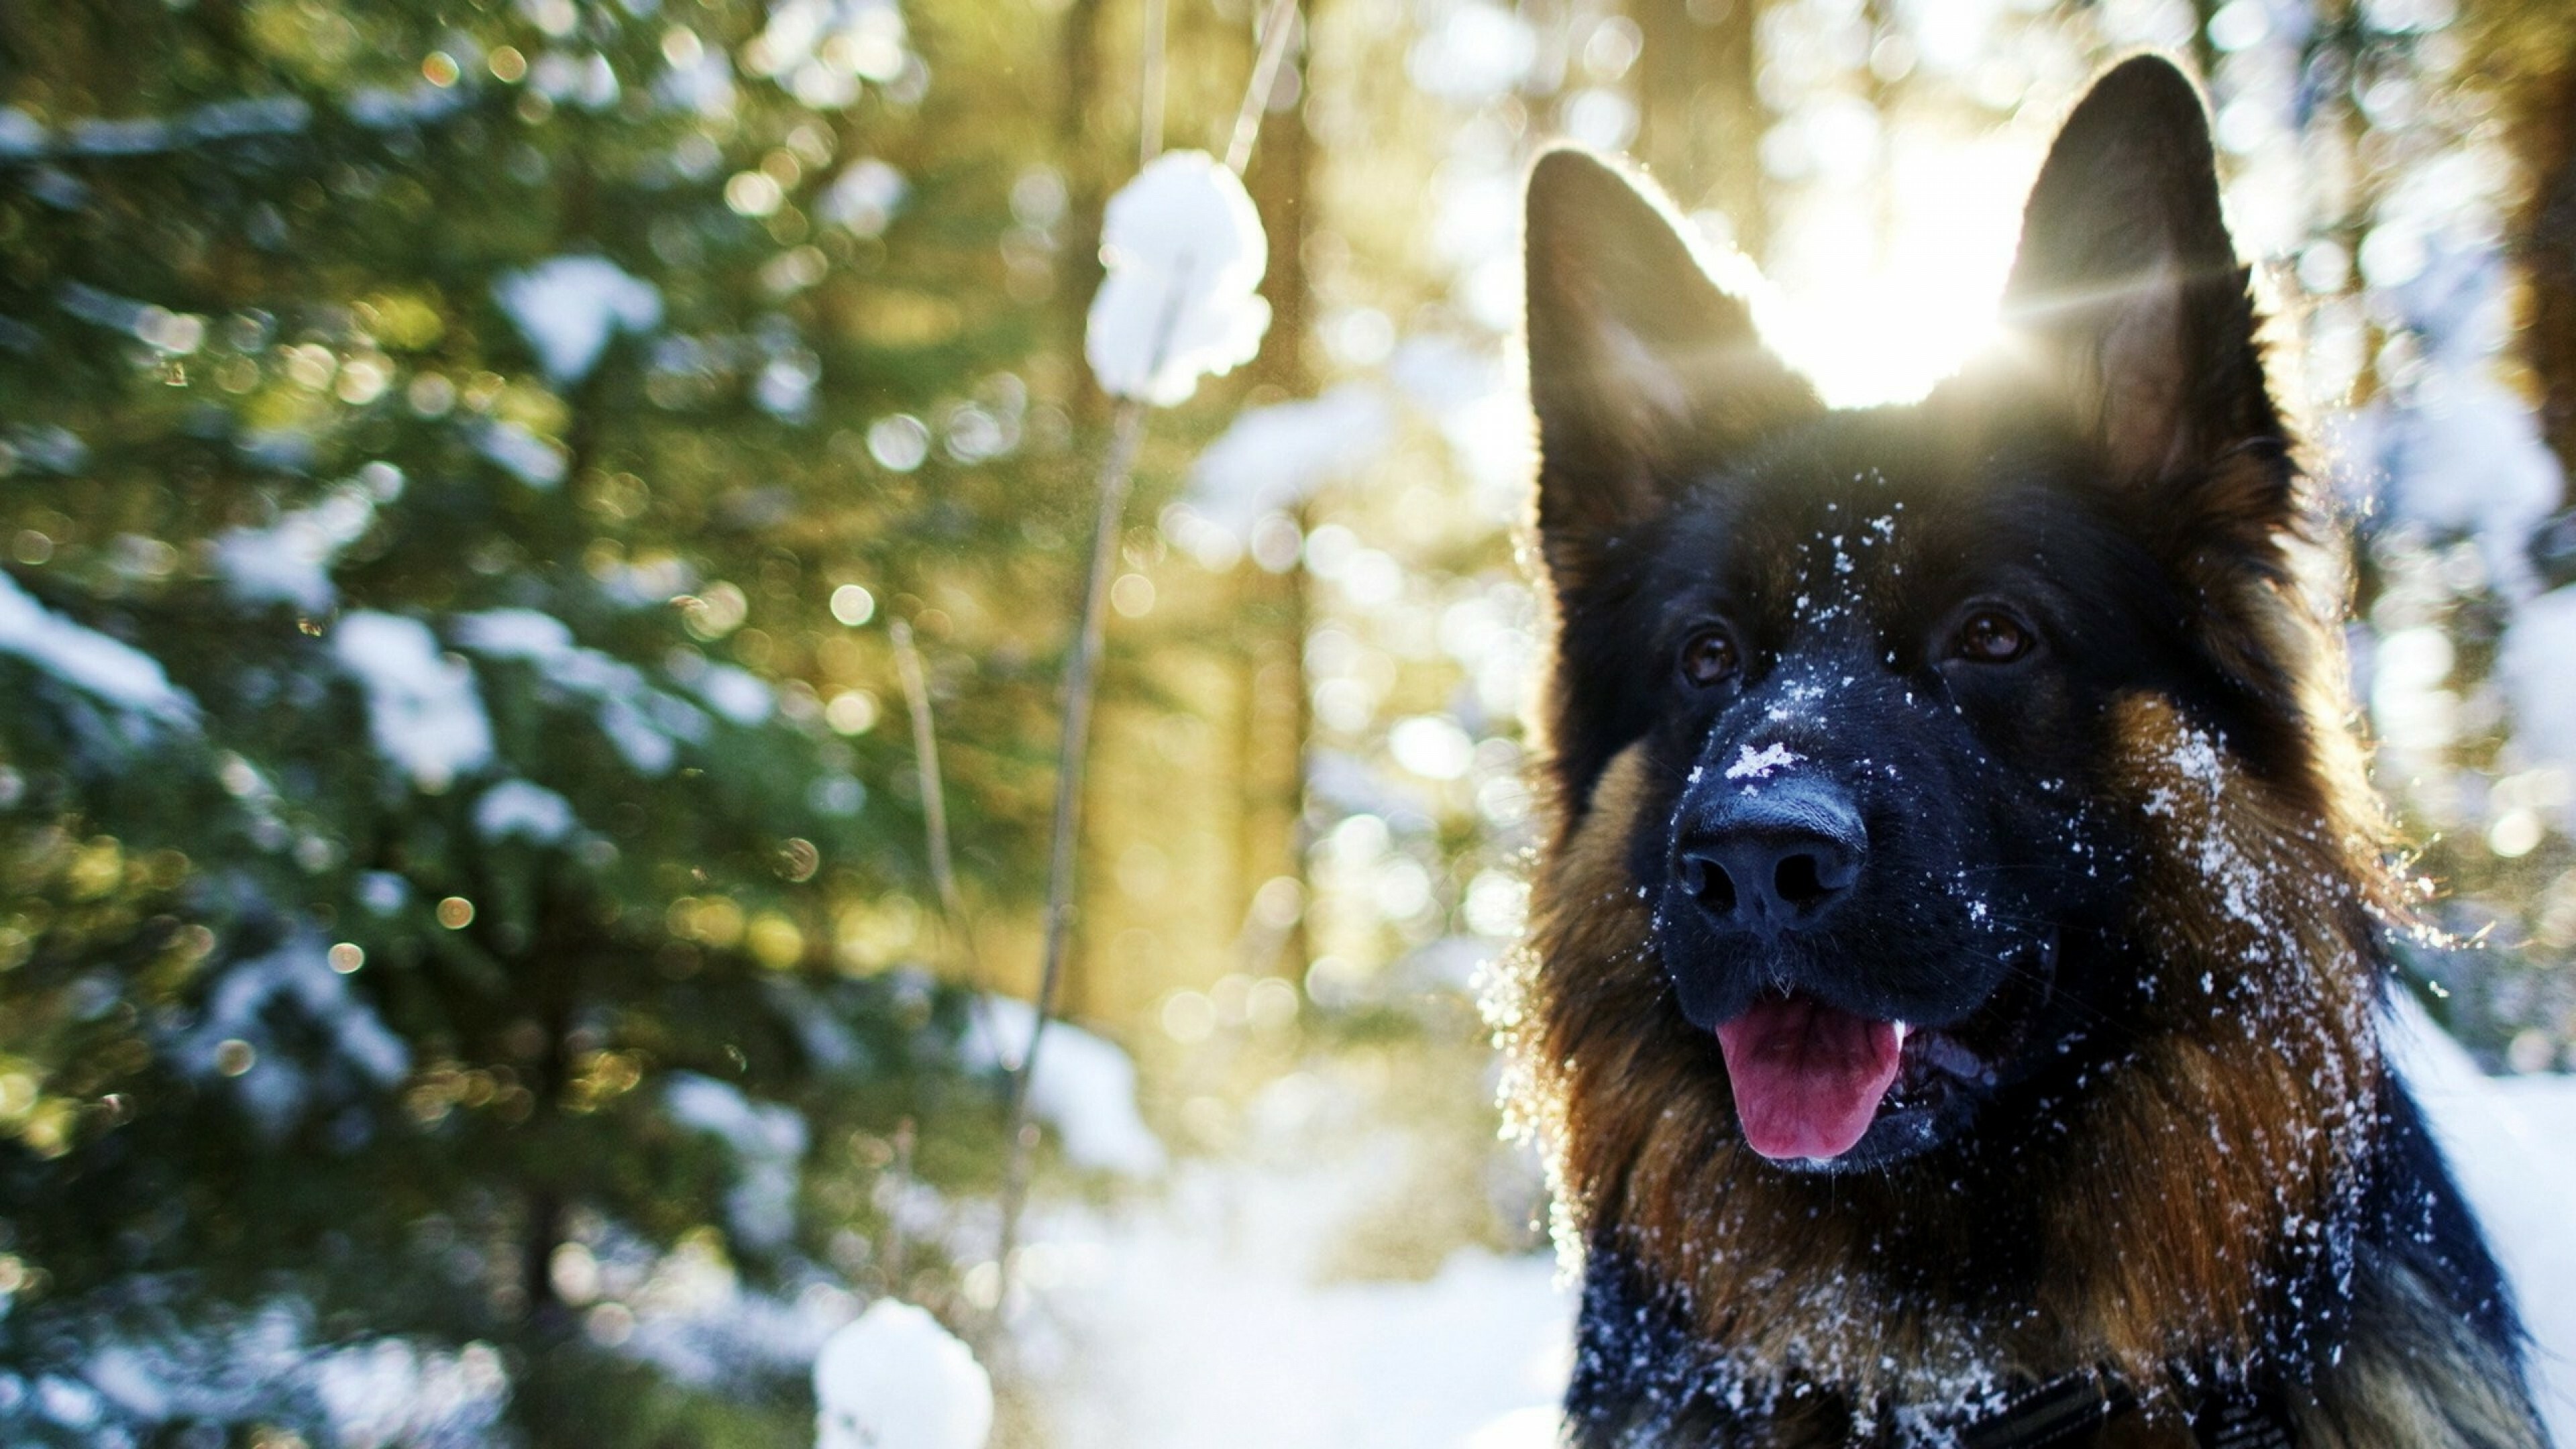 German Shepherd: German Shepherd In Snow, HD Animals, 4k Wallpapers, Images, Backgrounds,  Photos and Pictures. 3840x2160 4K Wallpaper.